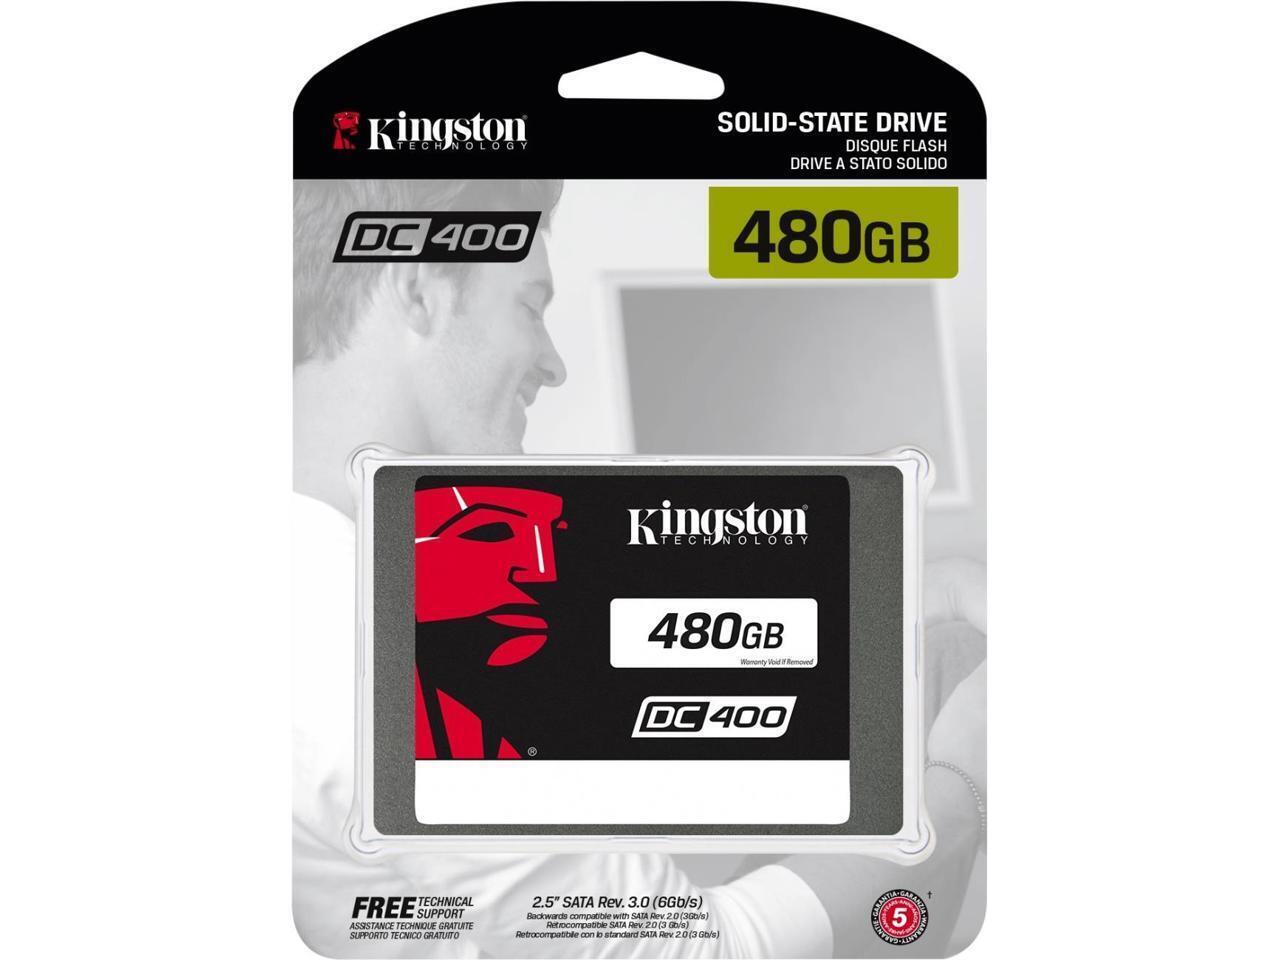 Kingston DC400 480GB 2.5” Enterprise Grade Solid State Drive SEDC400S37/480G NEW